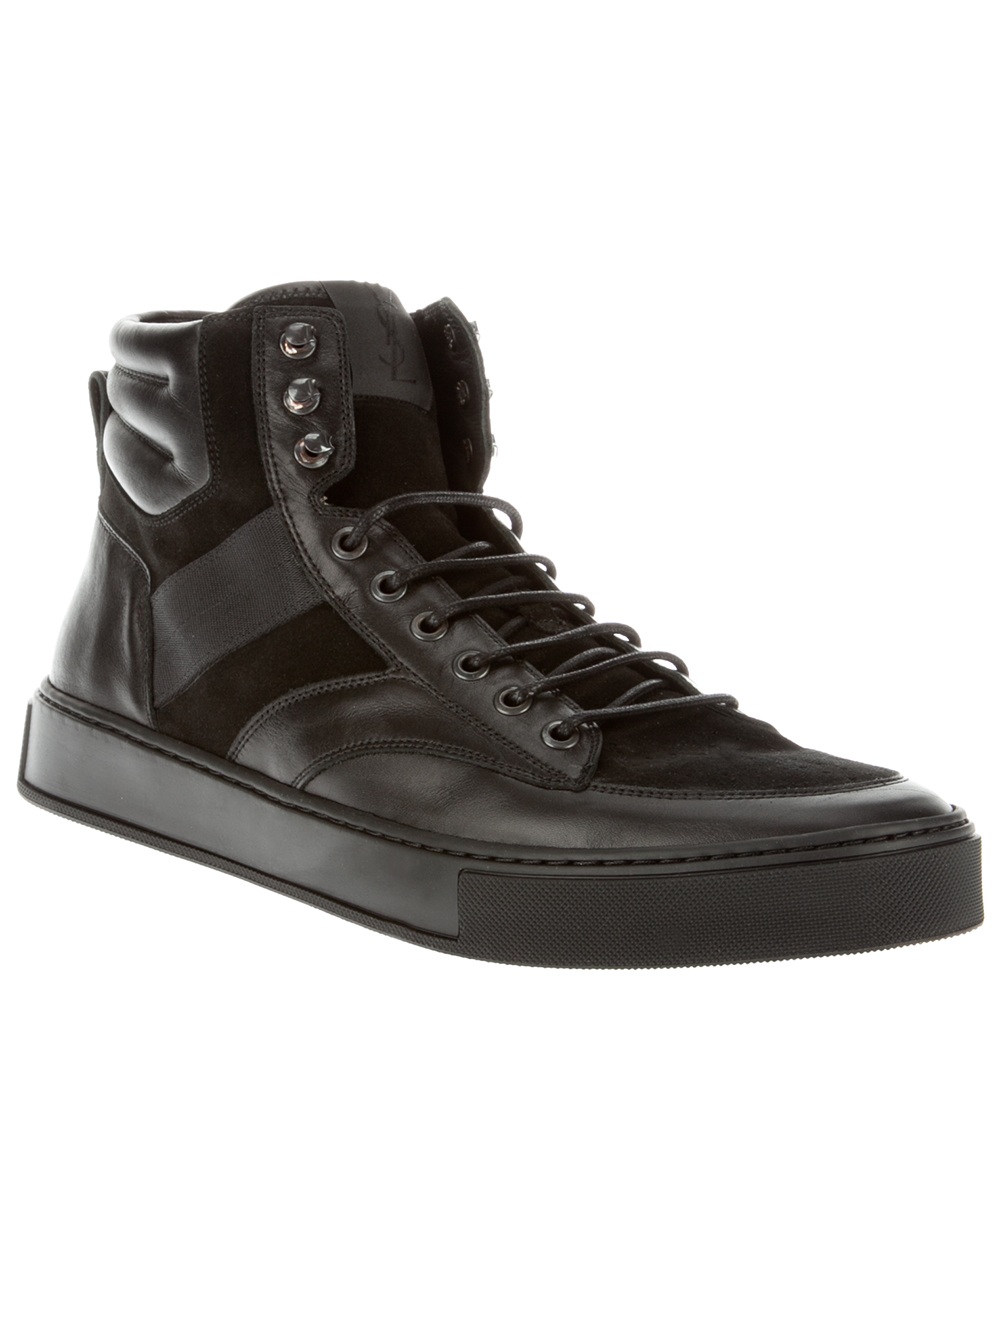 Saint Laurent Leather High-top Sneaker in Black for Men | Lyst